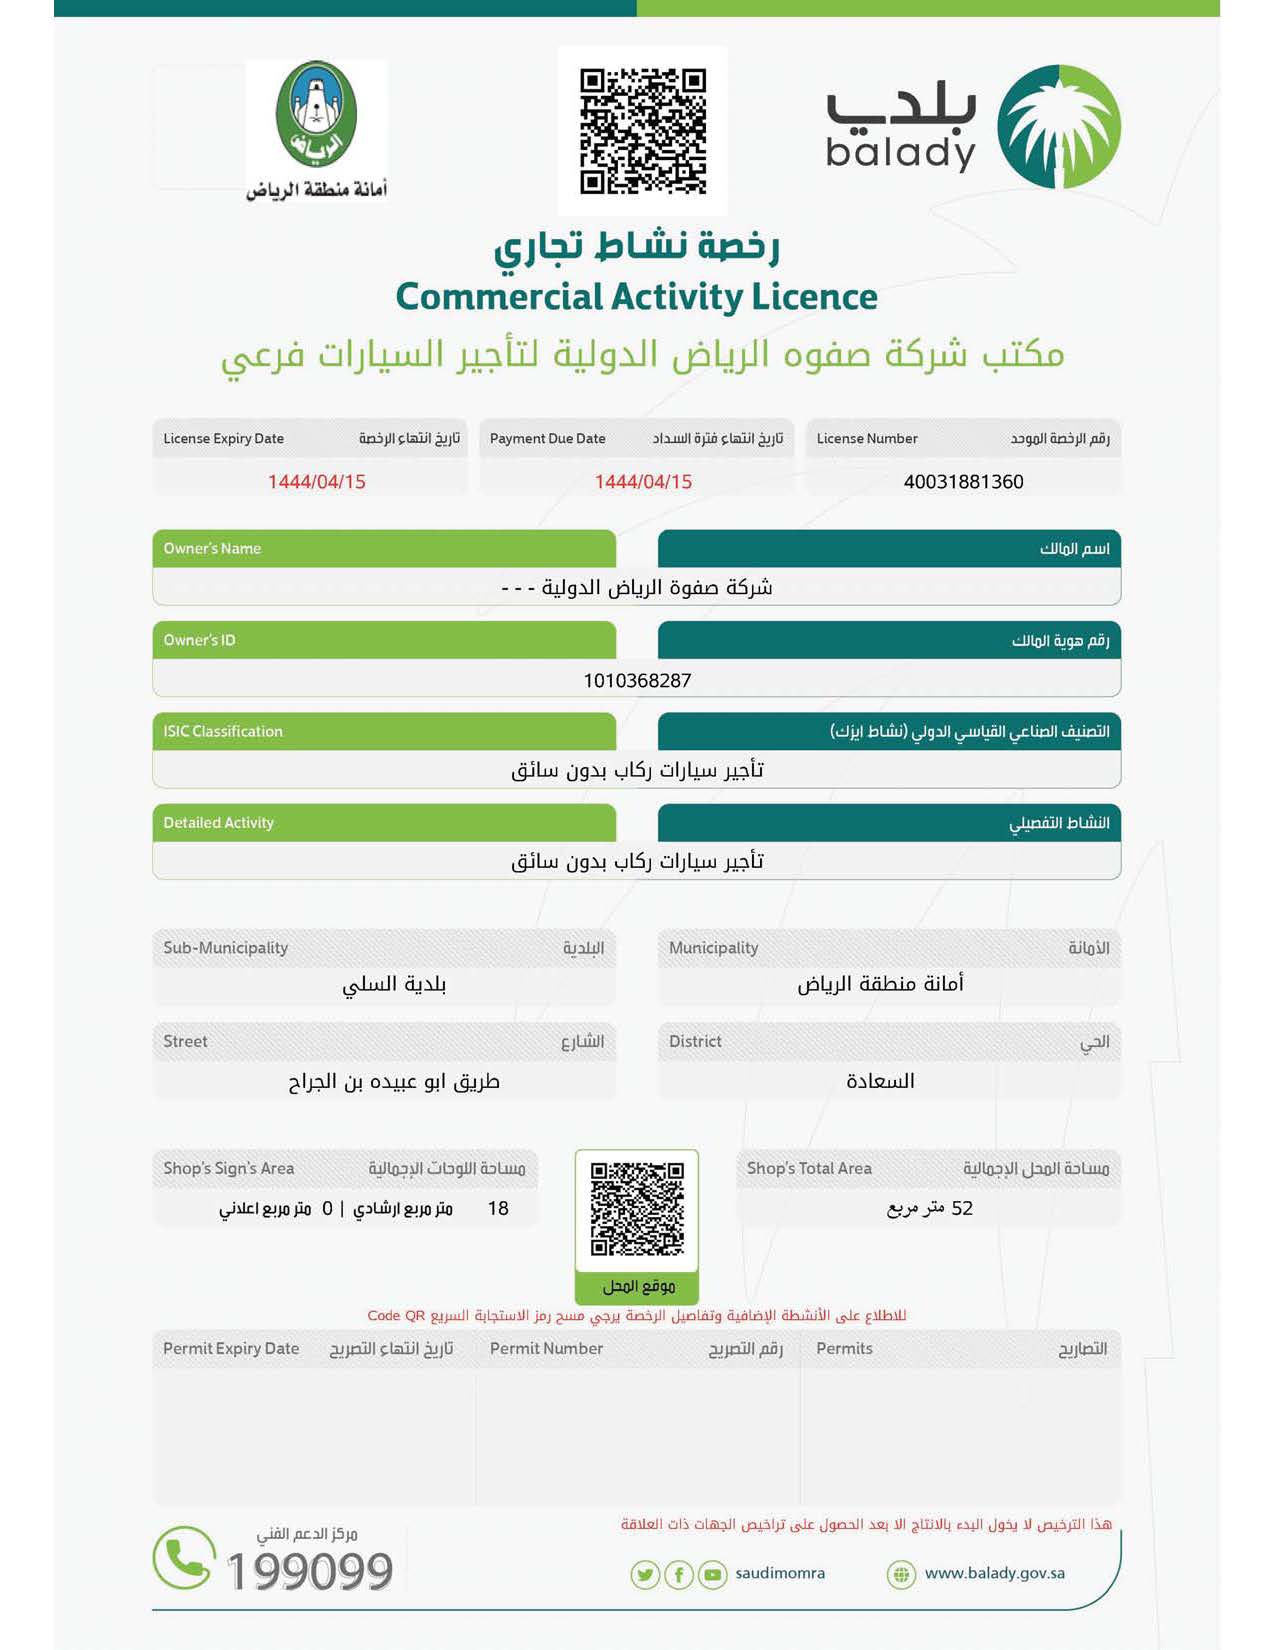 البلديات Page 05 One of the leading companies and a significant number in all its fields